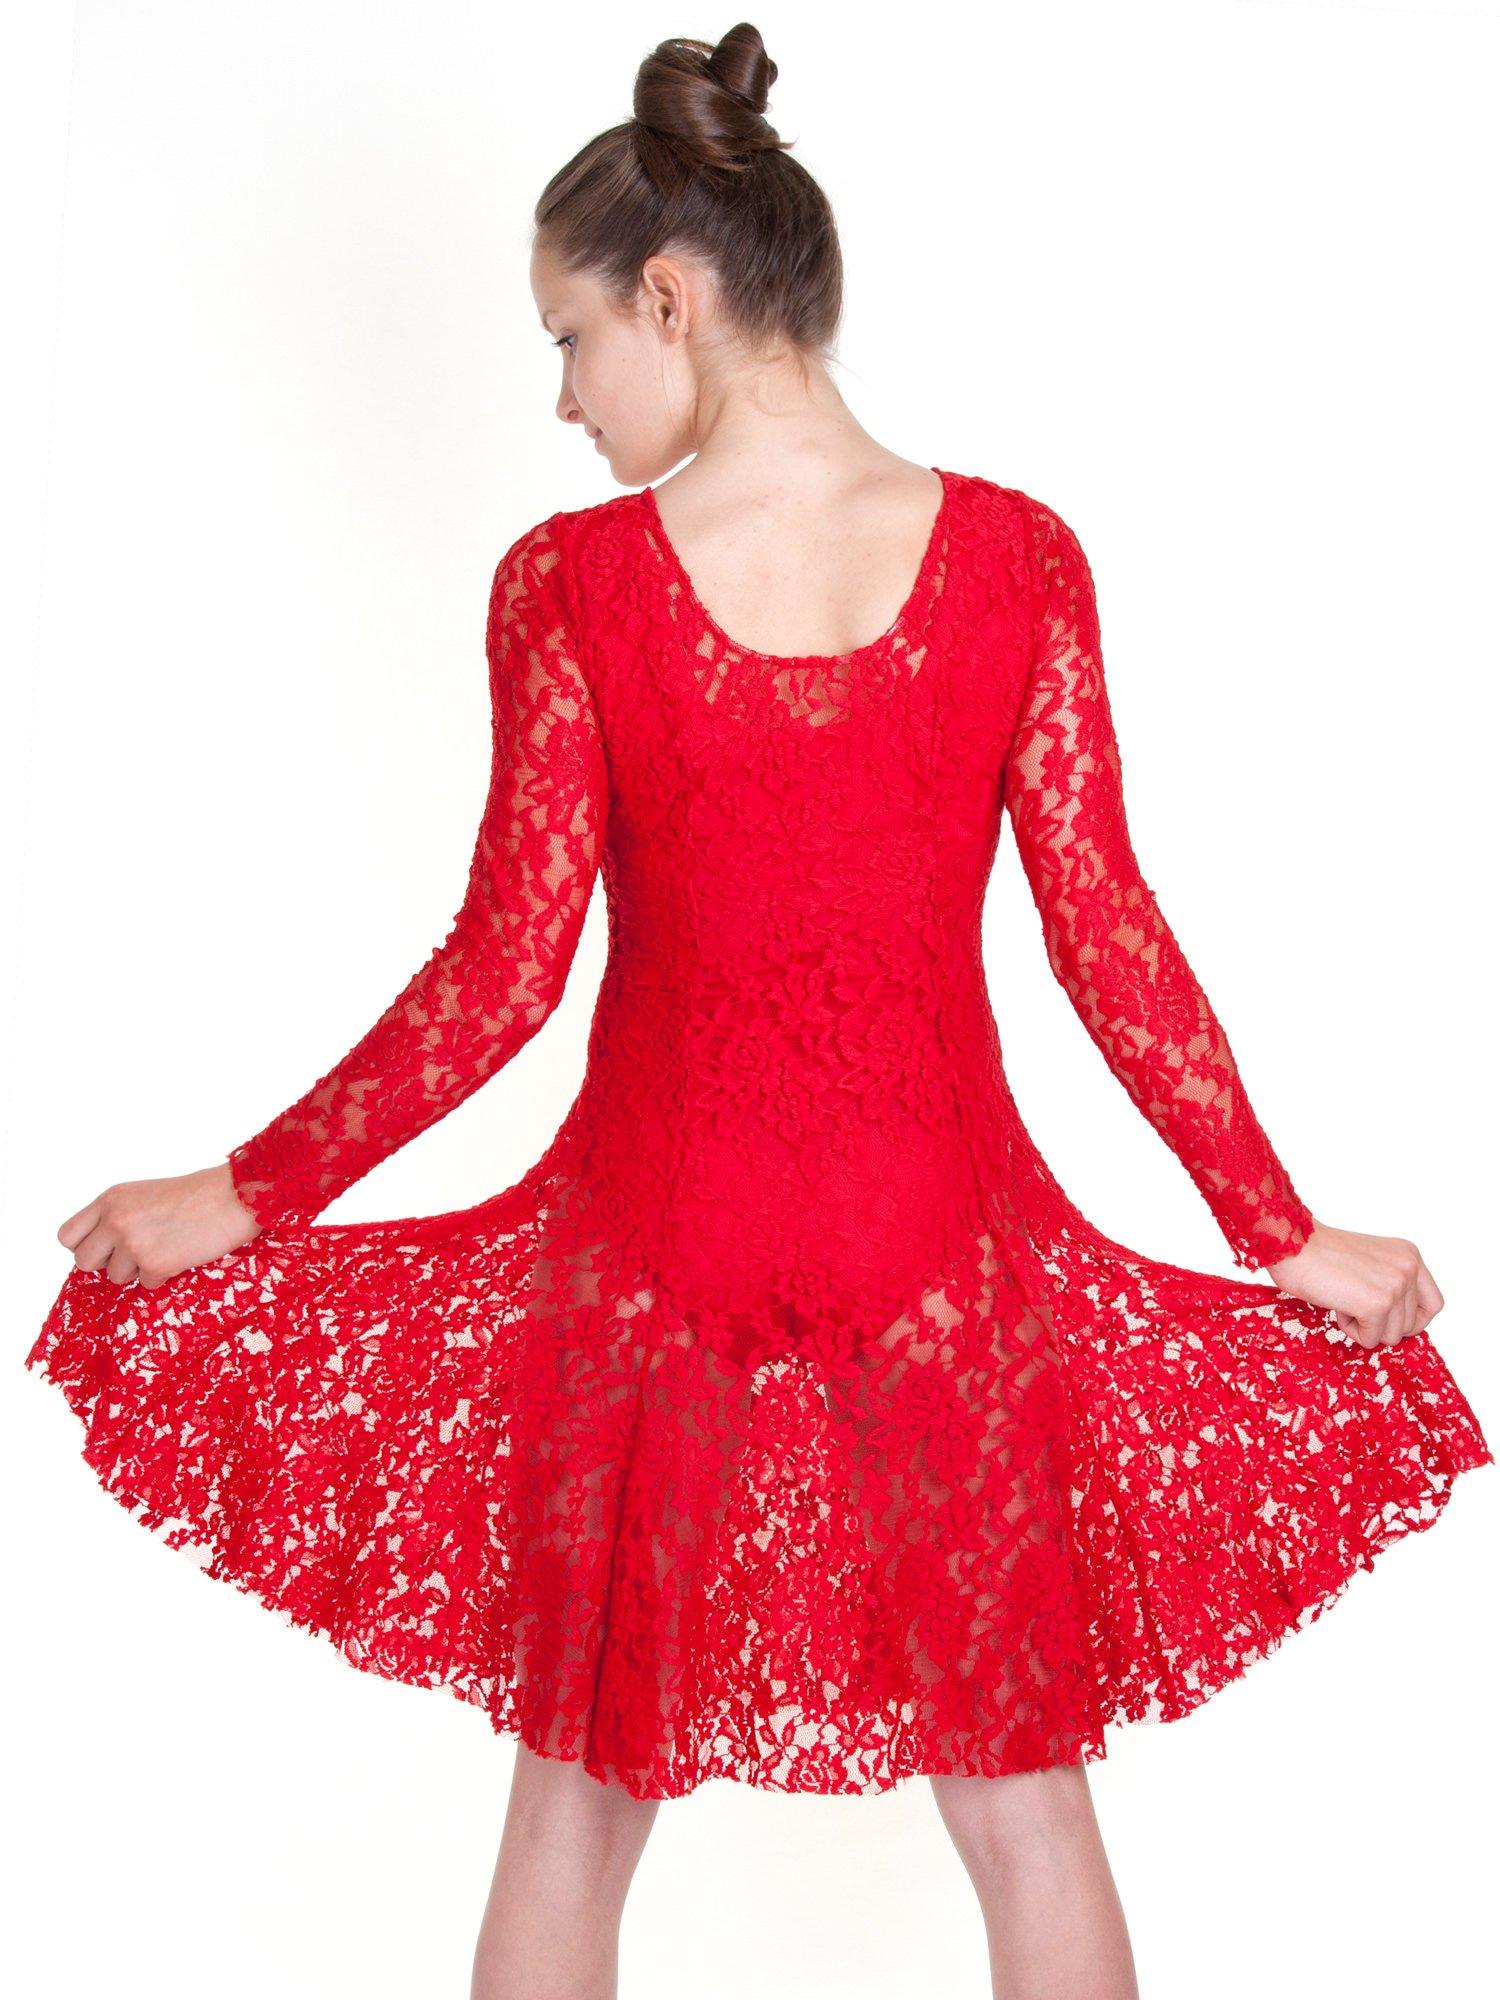 Jalie 3460 - PDF Pattern for Salsa Dress with Attached Leotard